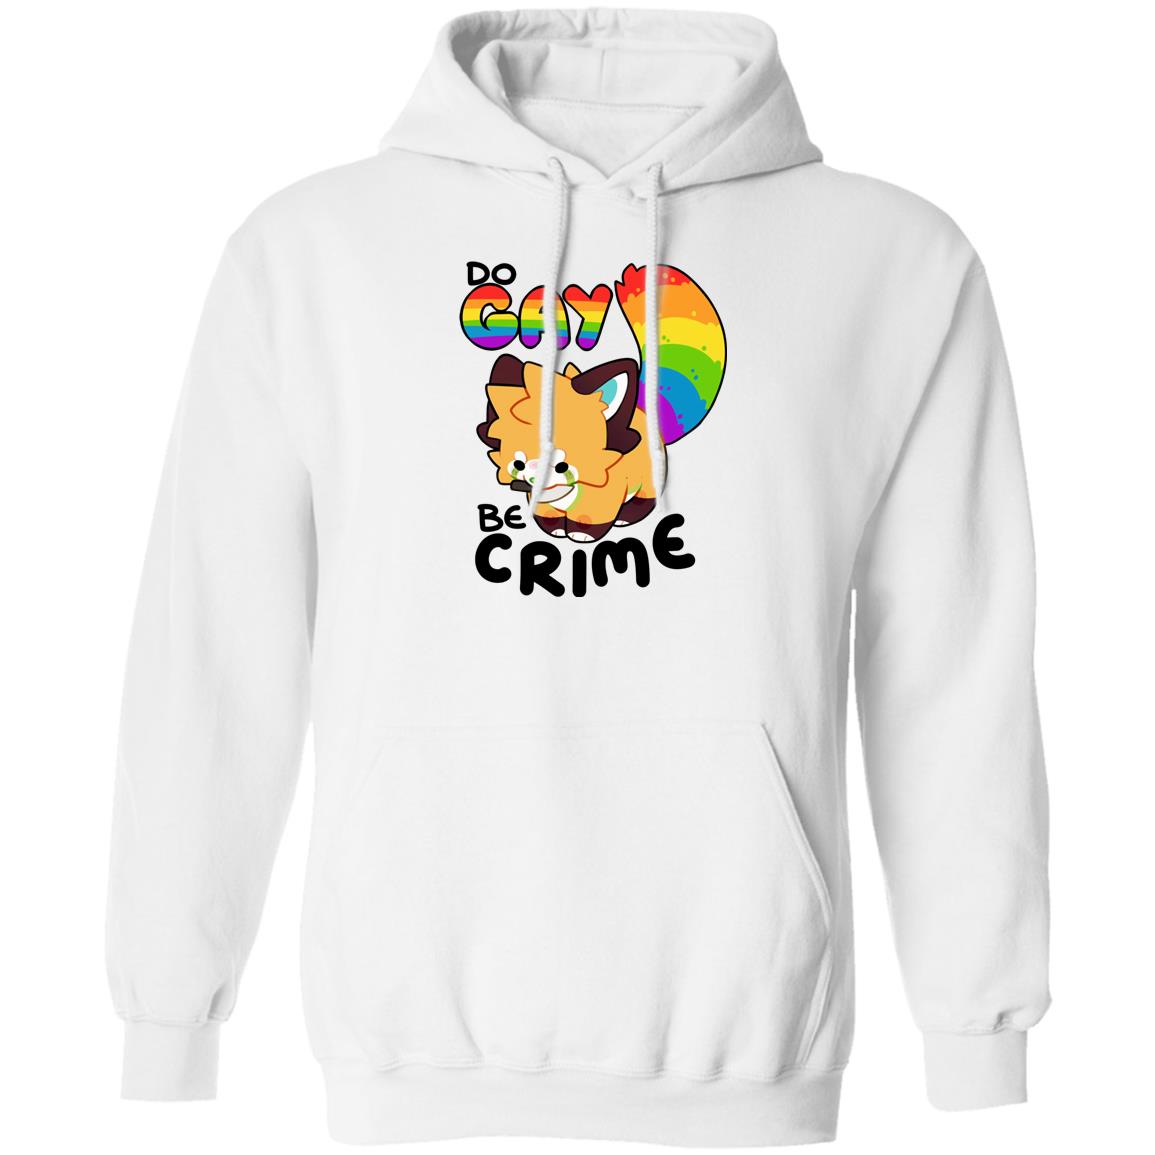 Do Gay Be Crime Shirt 1